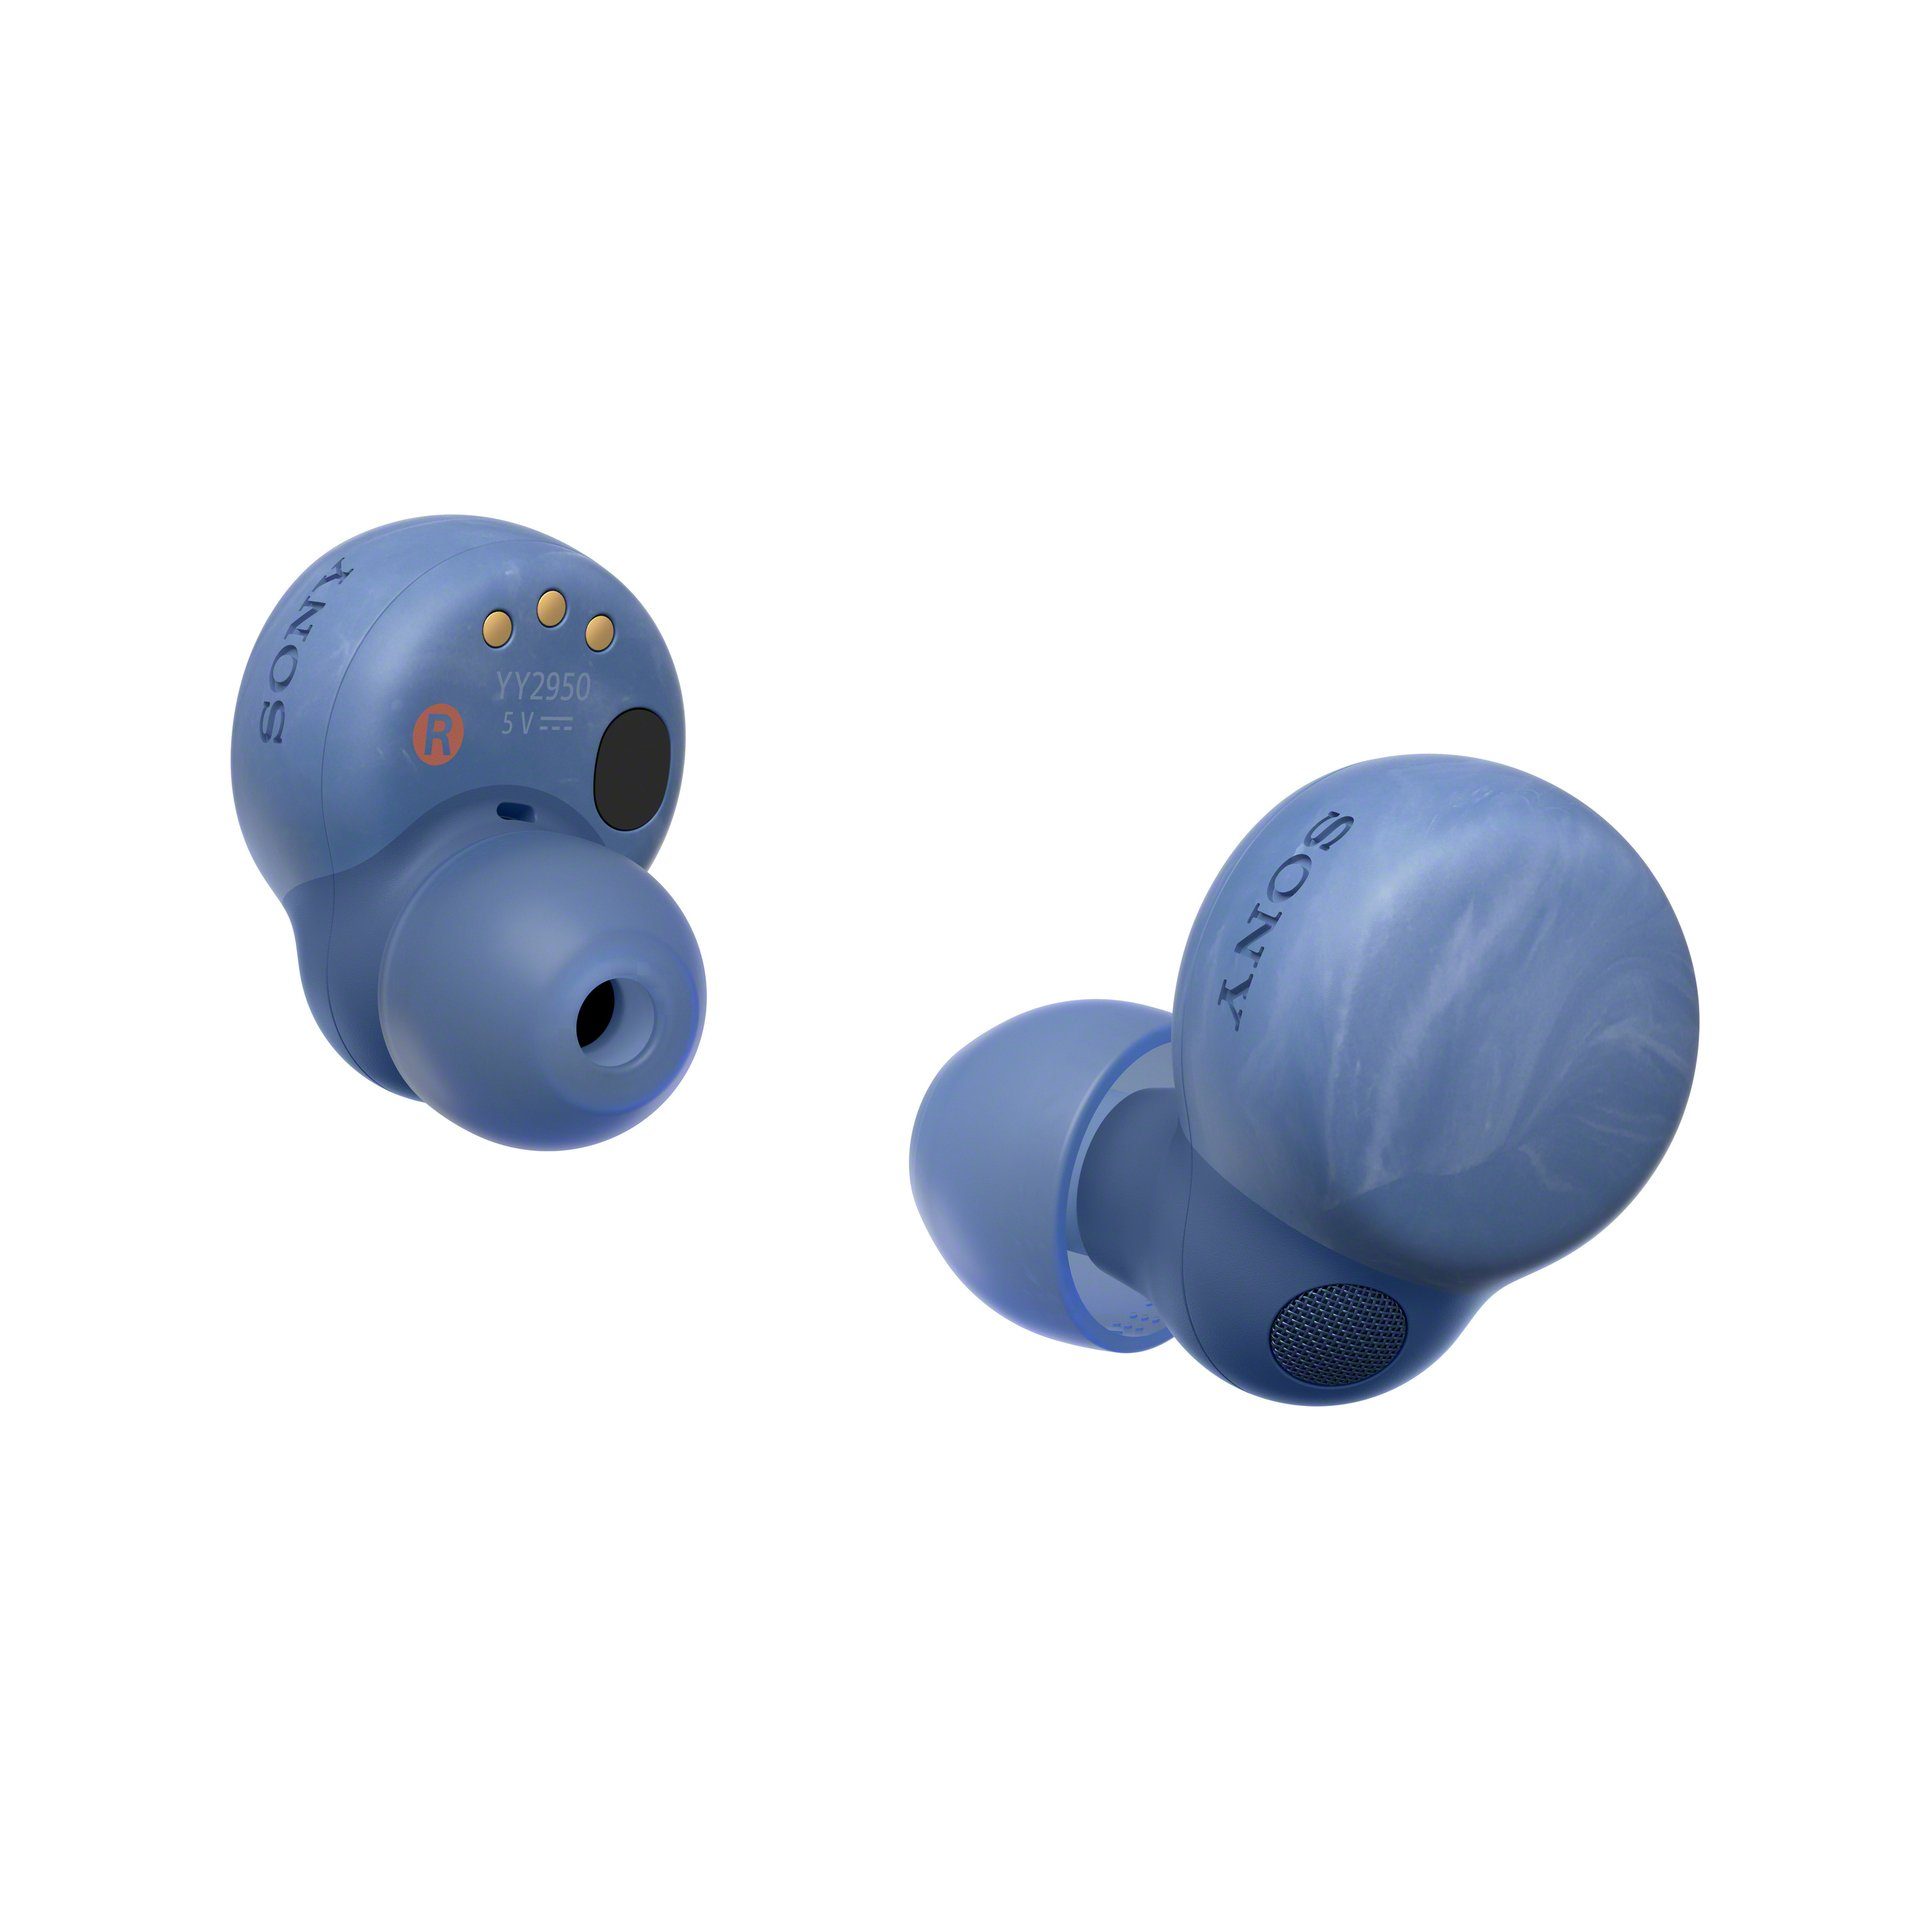 Noise True LinkBuds Akkulaufzeit) In-Ear-Kopfhörer wireless (Noise-Cancelling, Touch-Steuerung, NFC, Cancelling, 20 Wireless, blau S Sony Bluetooth, st.